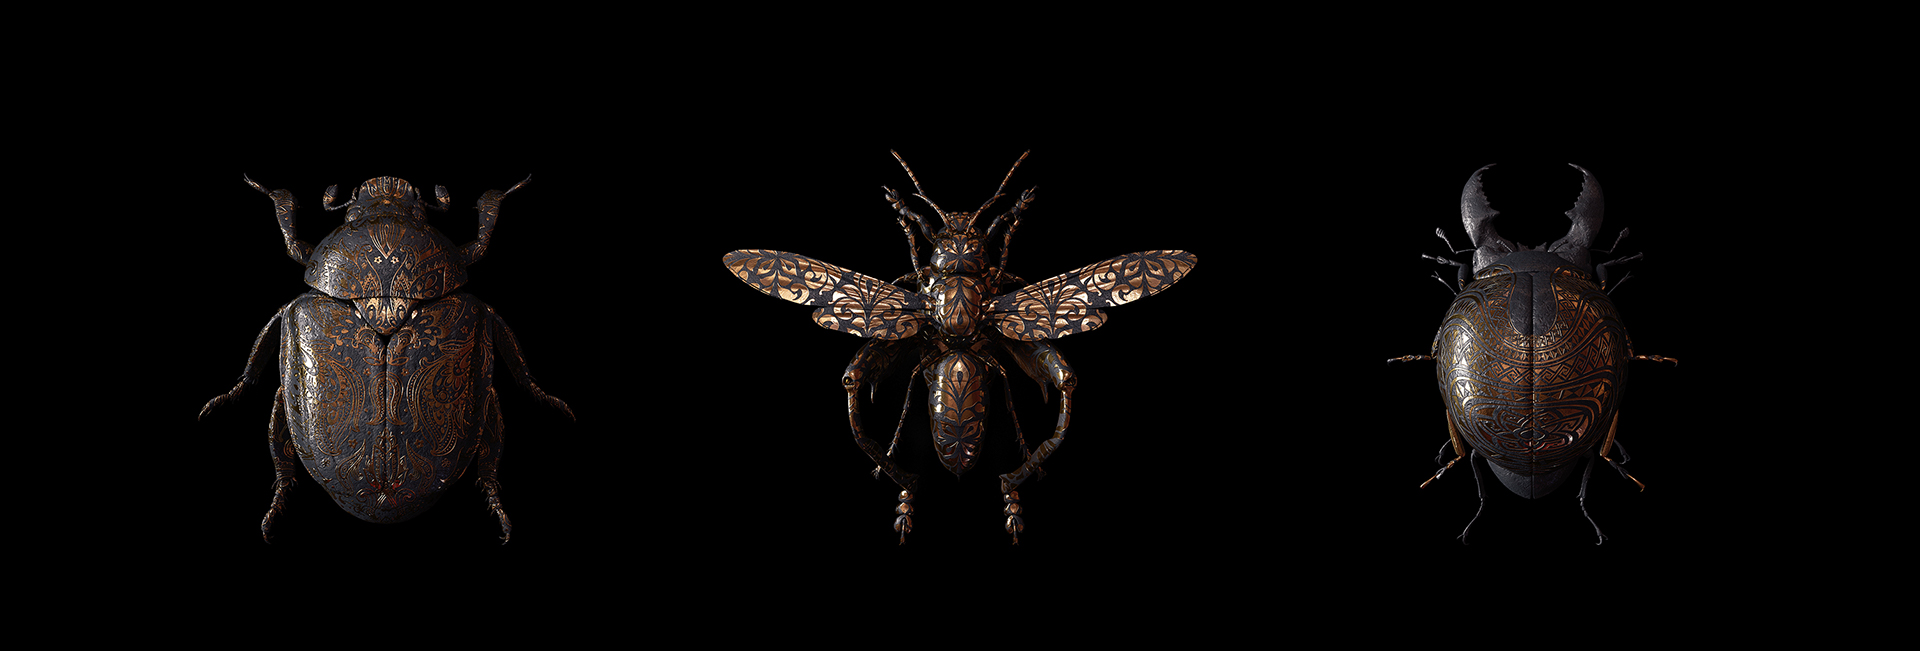 engraved-entomology6.jpg